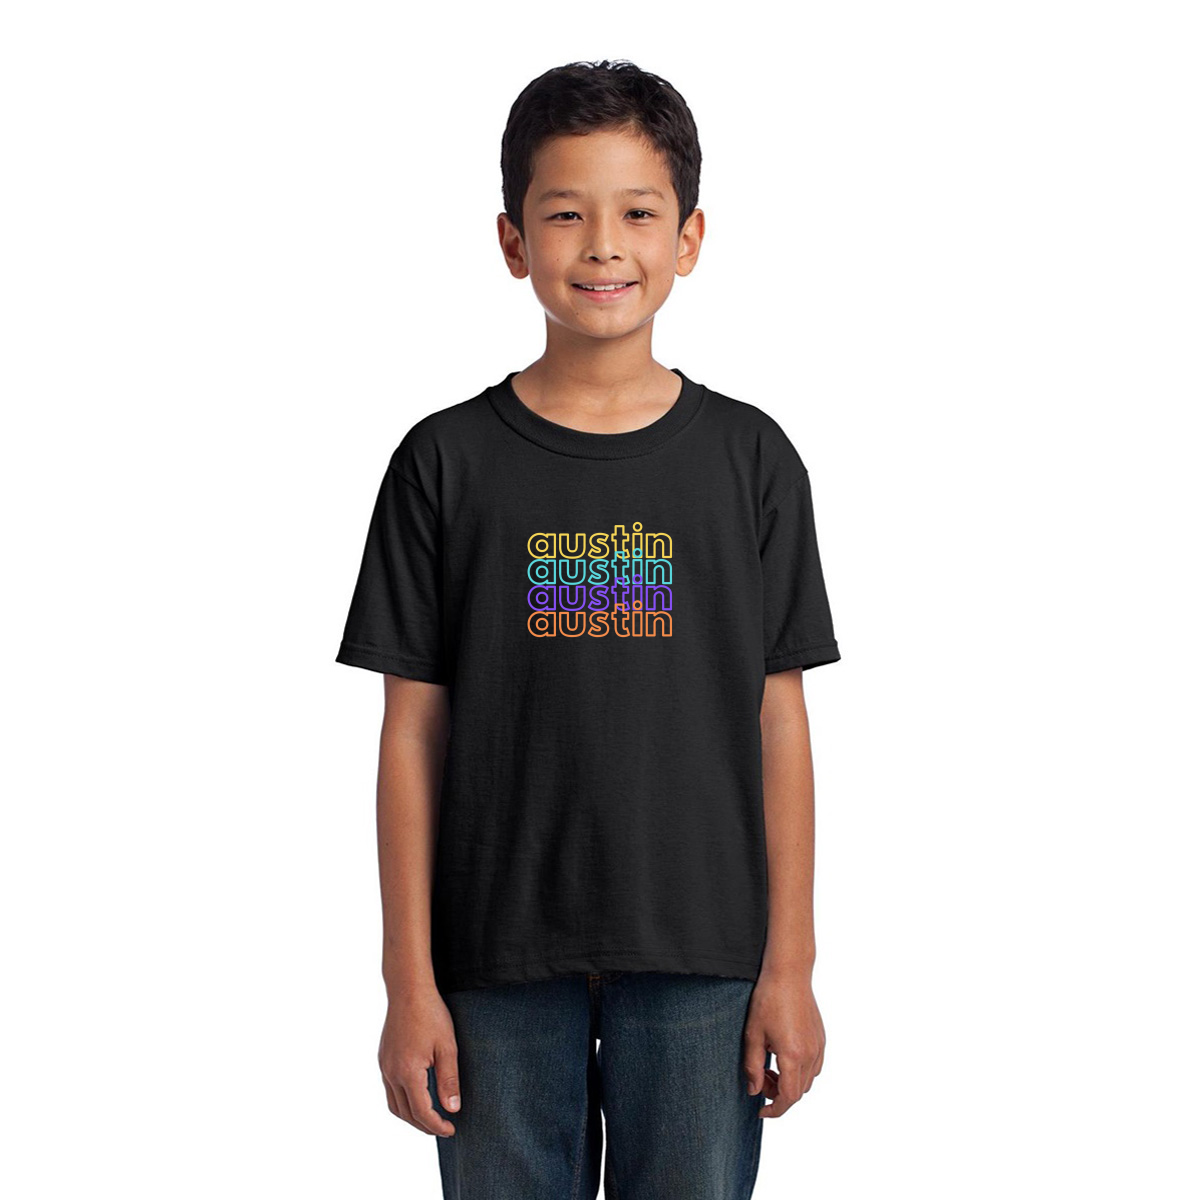 Austin Kids T-shirt | Black